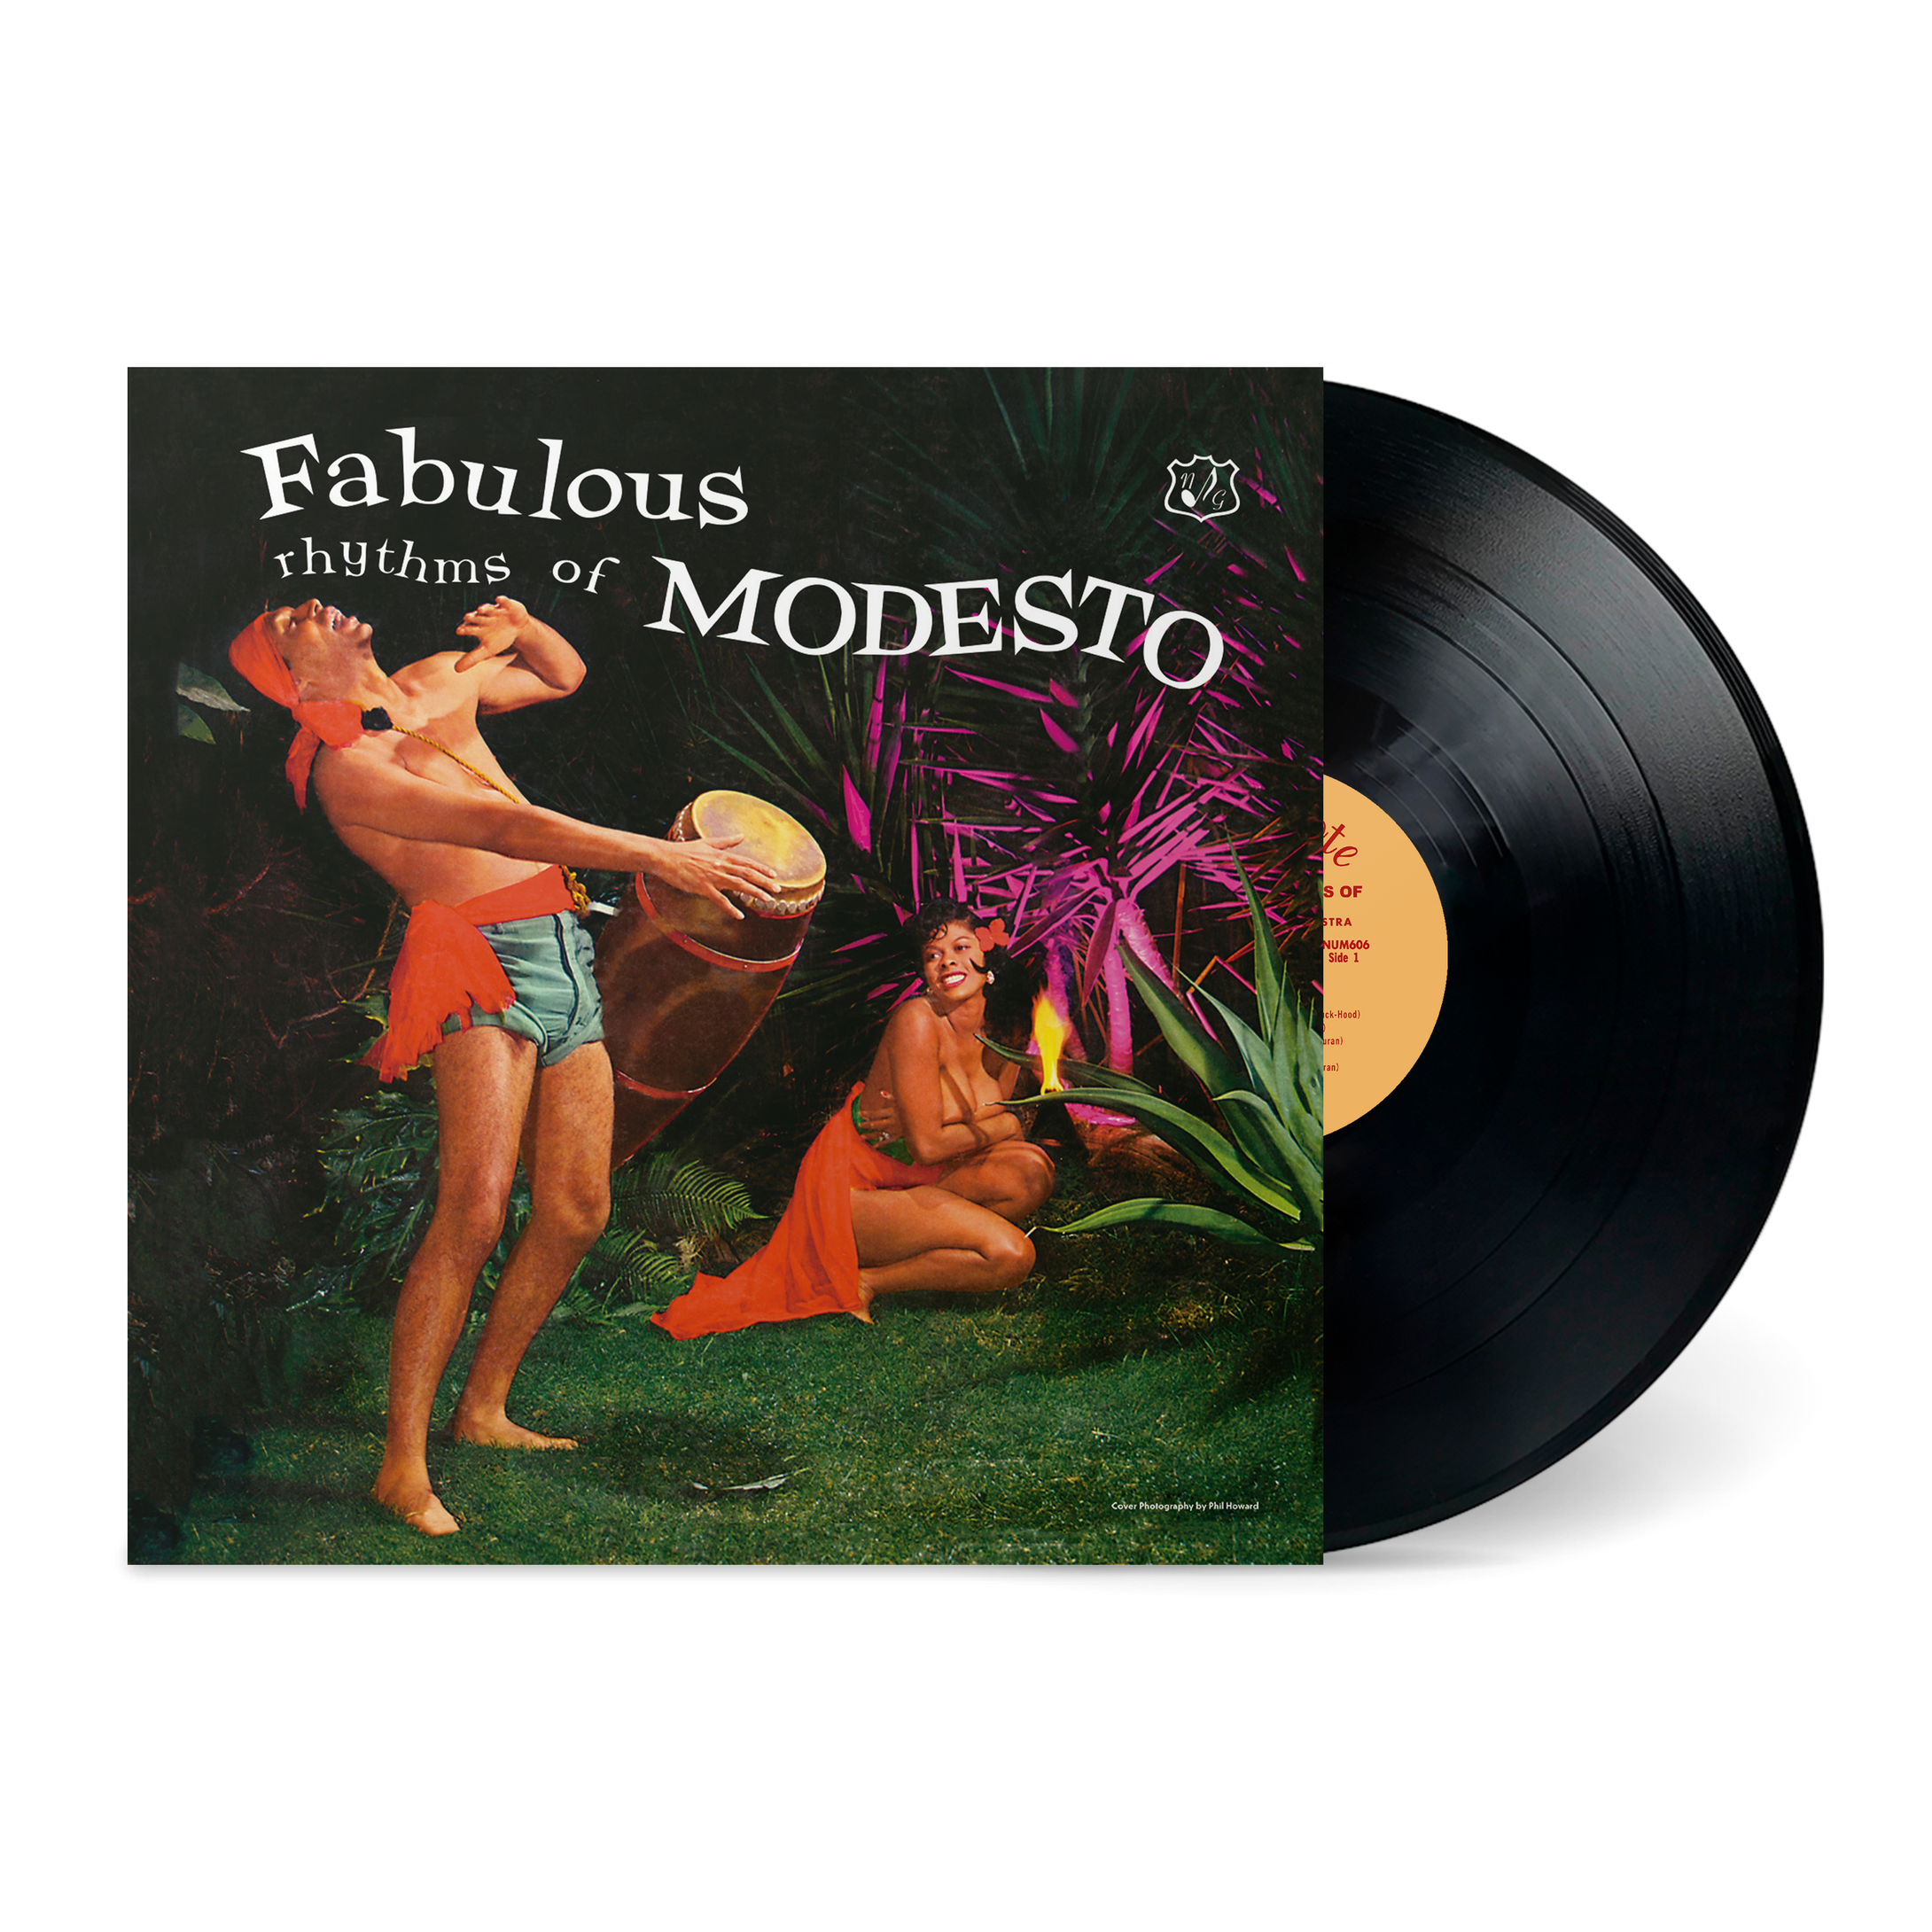 Fabulous Rhythms of Modesto